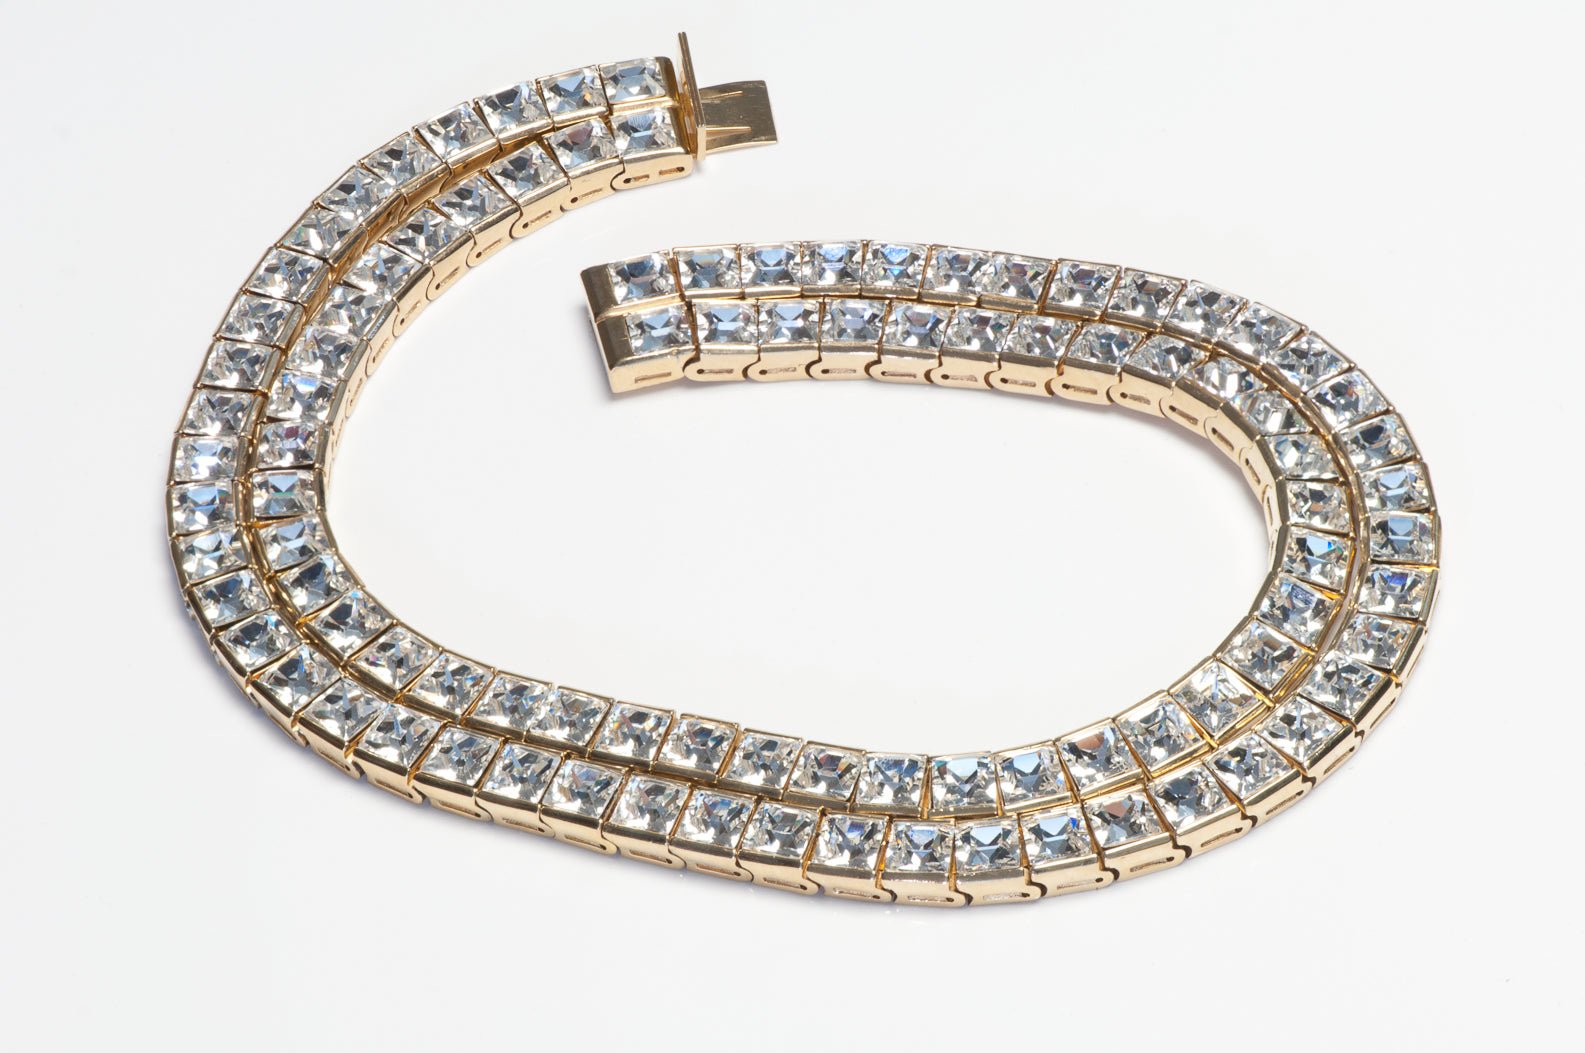 Christian Dior 1980’s by Gianfranco Ferré Crystal Necklace Earrings Bracelet Set